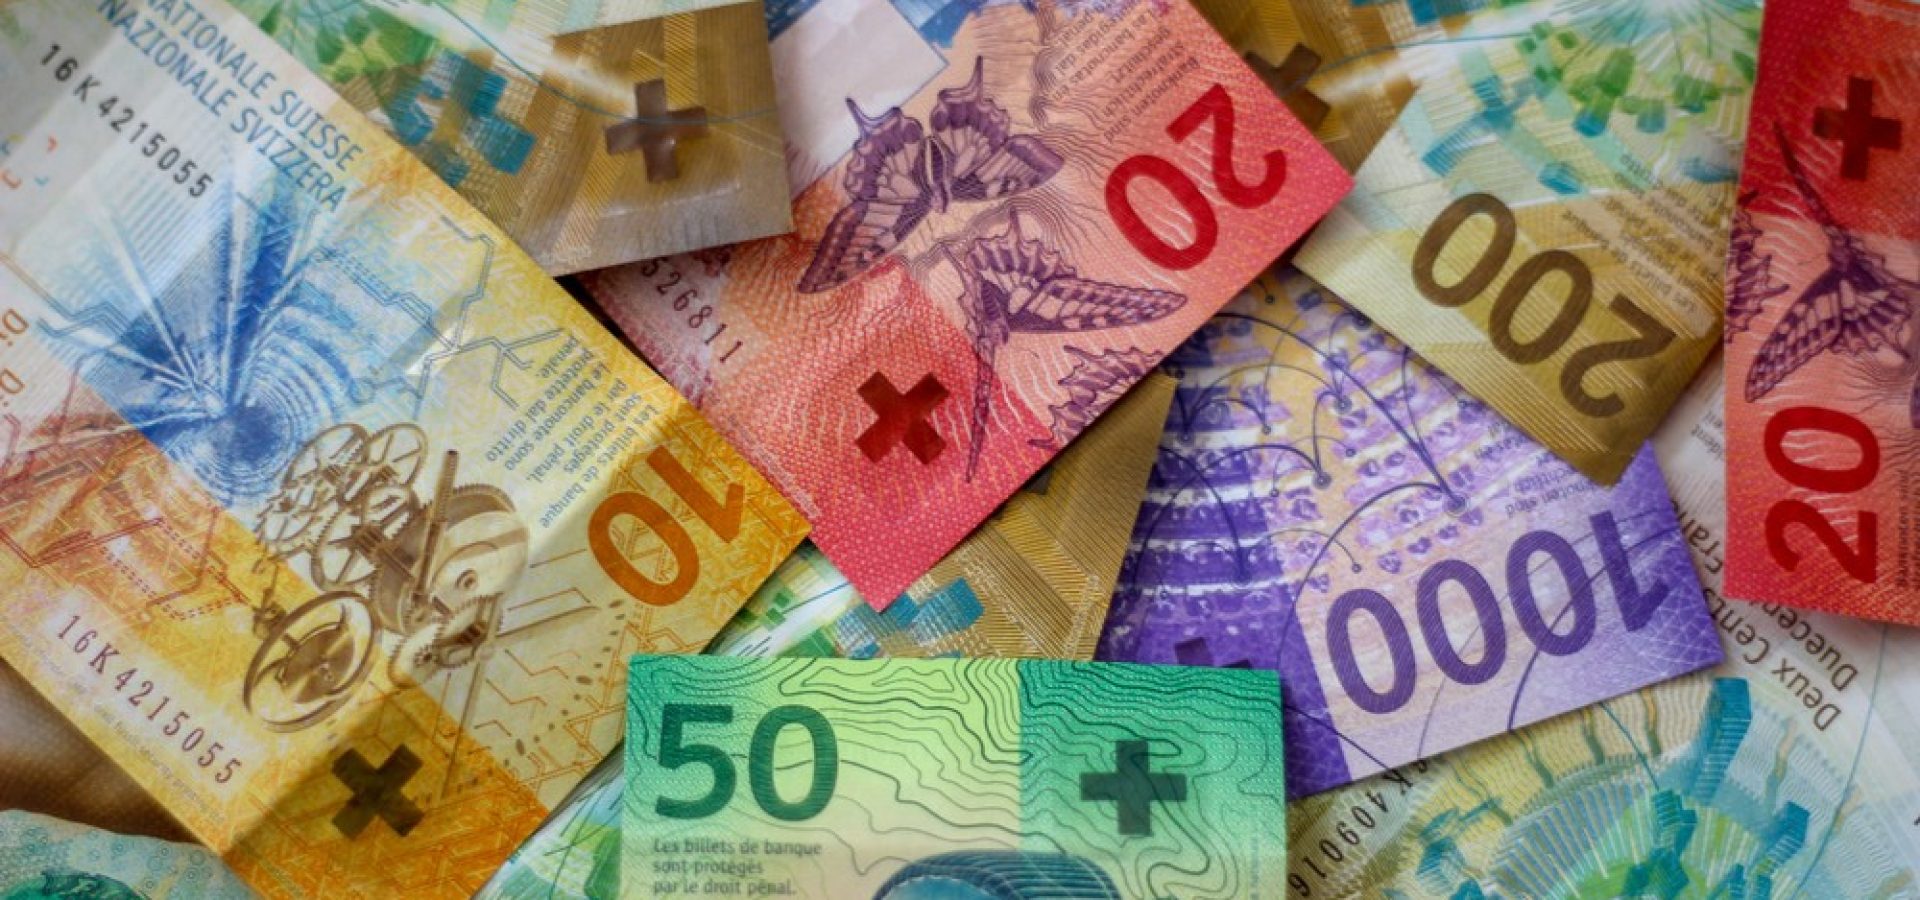 Washington: Swiss franc bills.